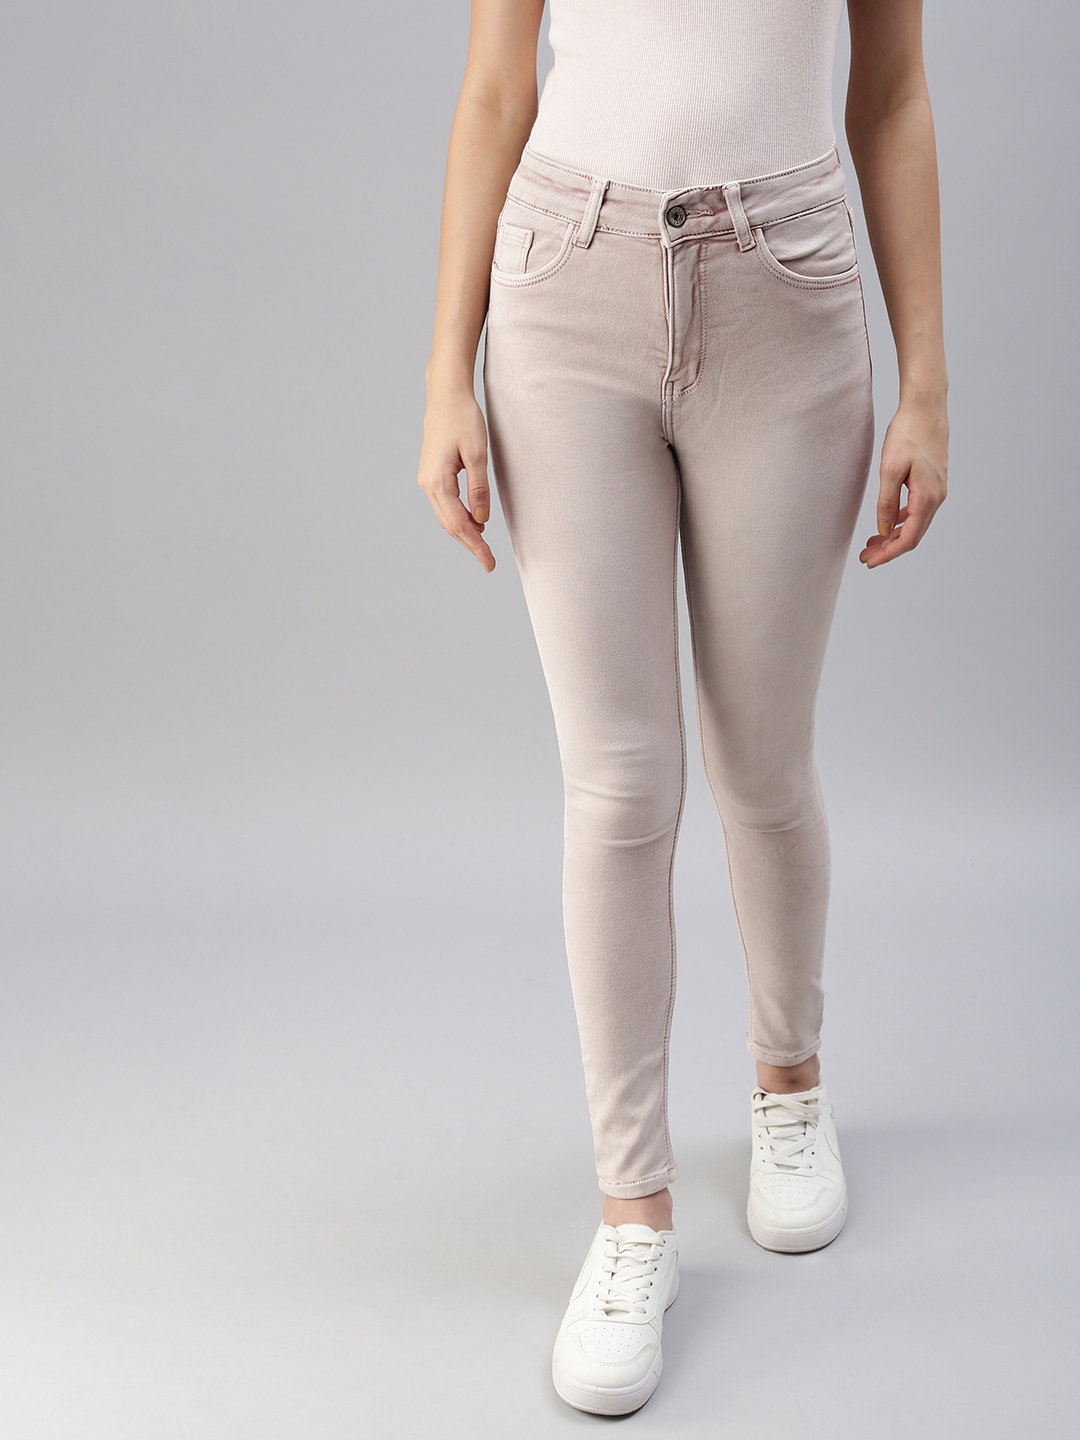 SHOWOFF Women's Clean Look Pink Skinny Fit Denim Jeans